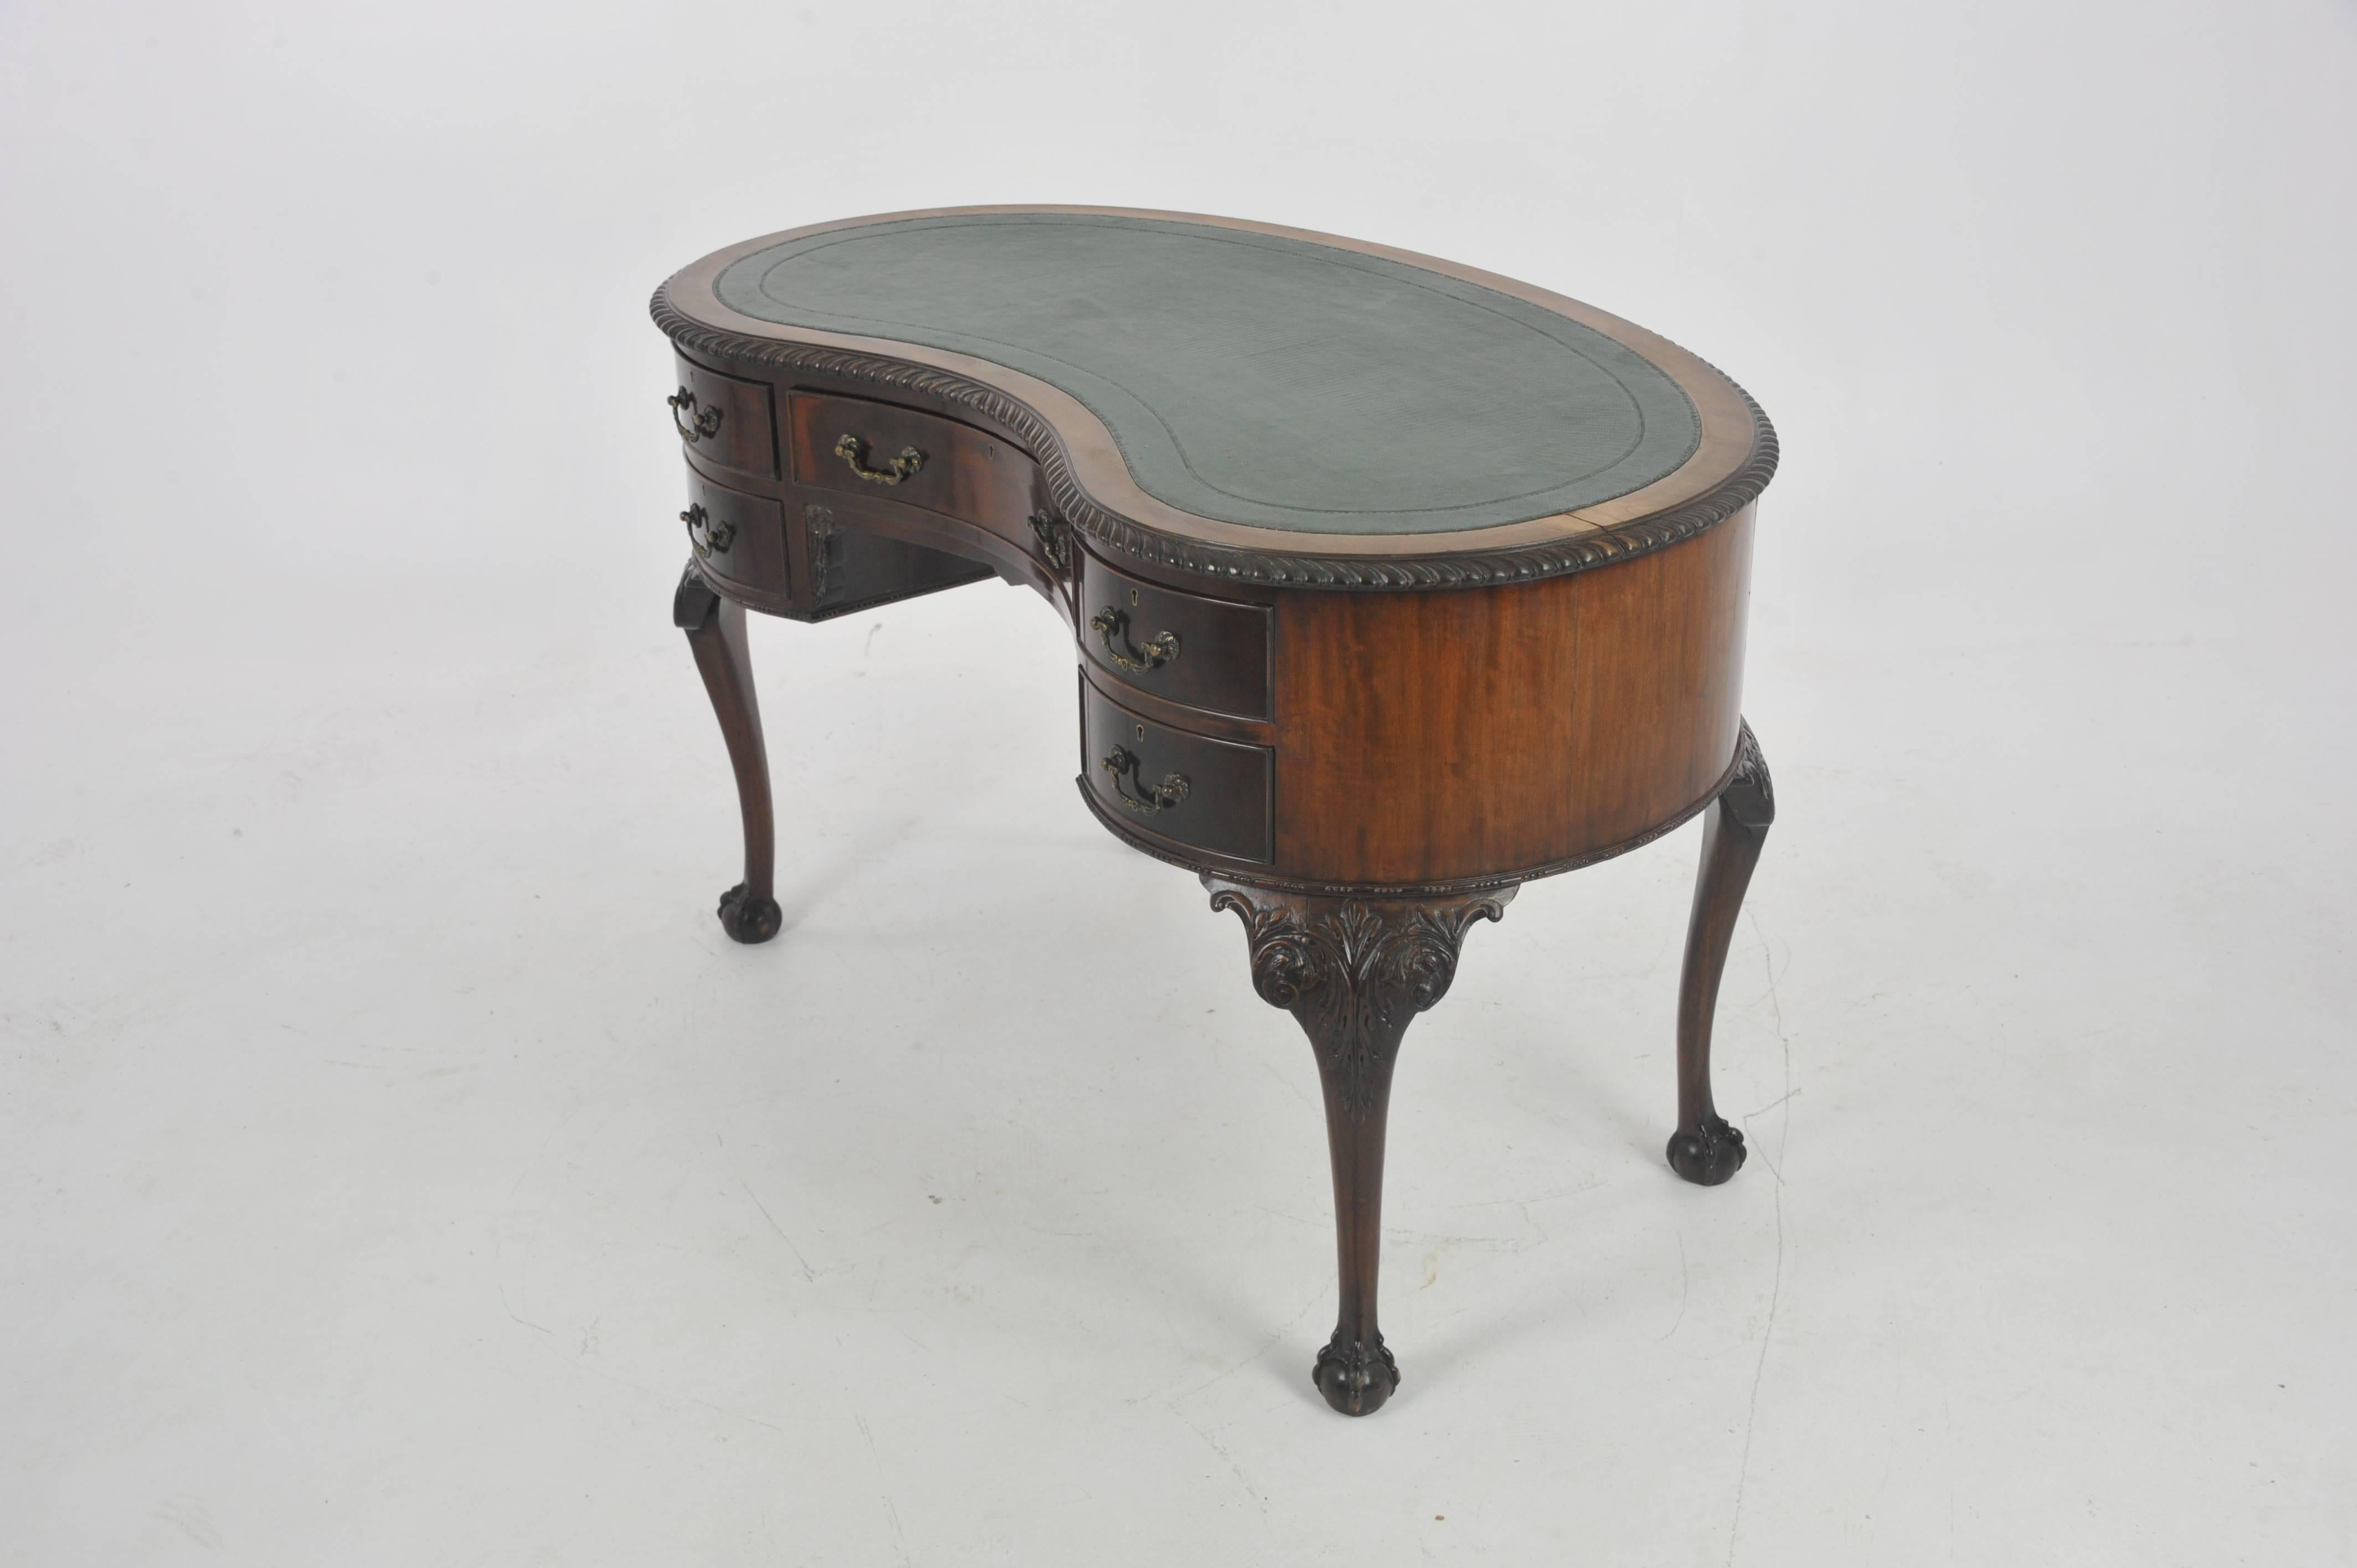 Early 20th Century Kidney Shaped Desk, Walnut Desk, Edwardian Writing Table, Scotland 1910, B967